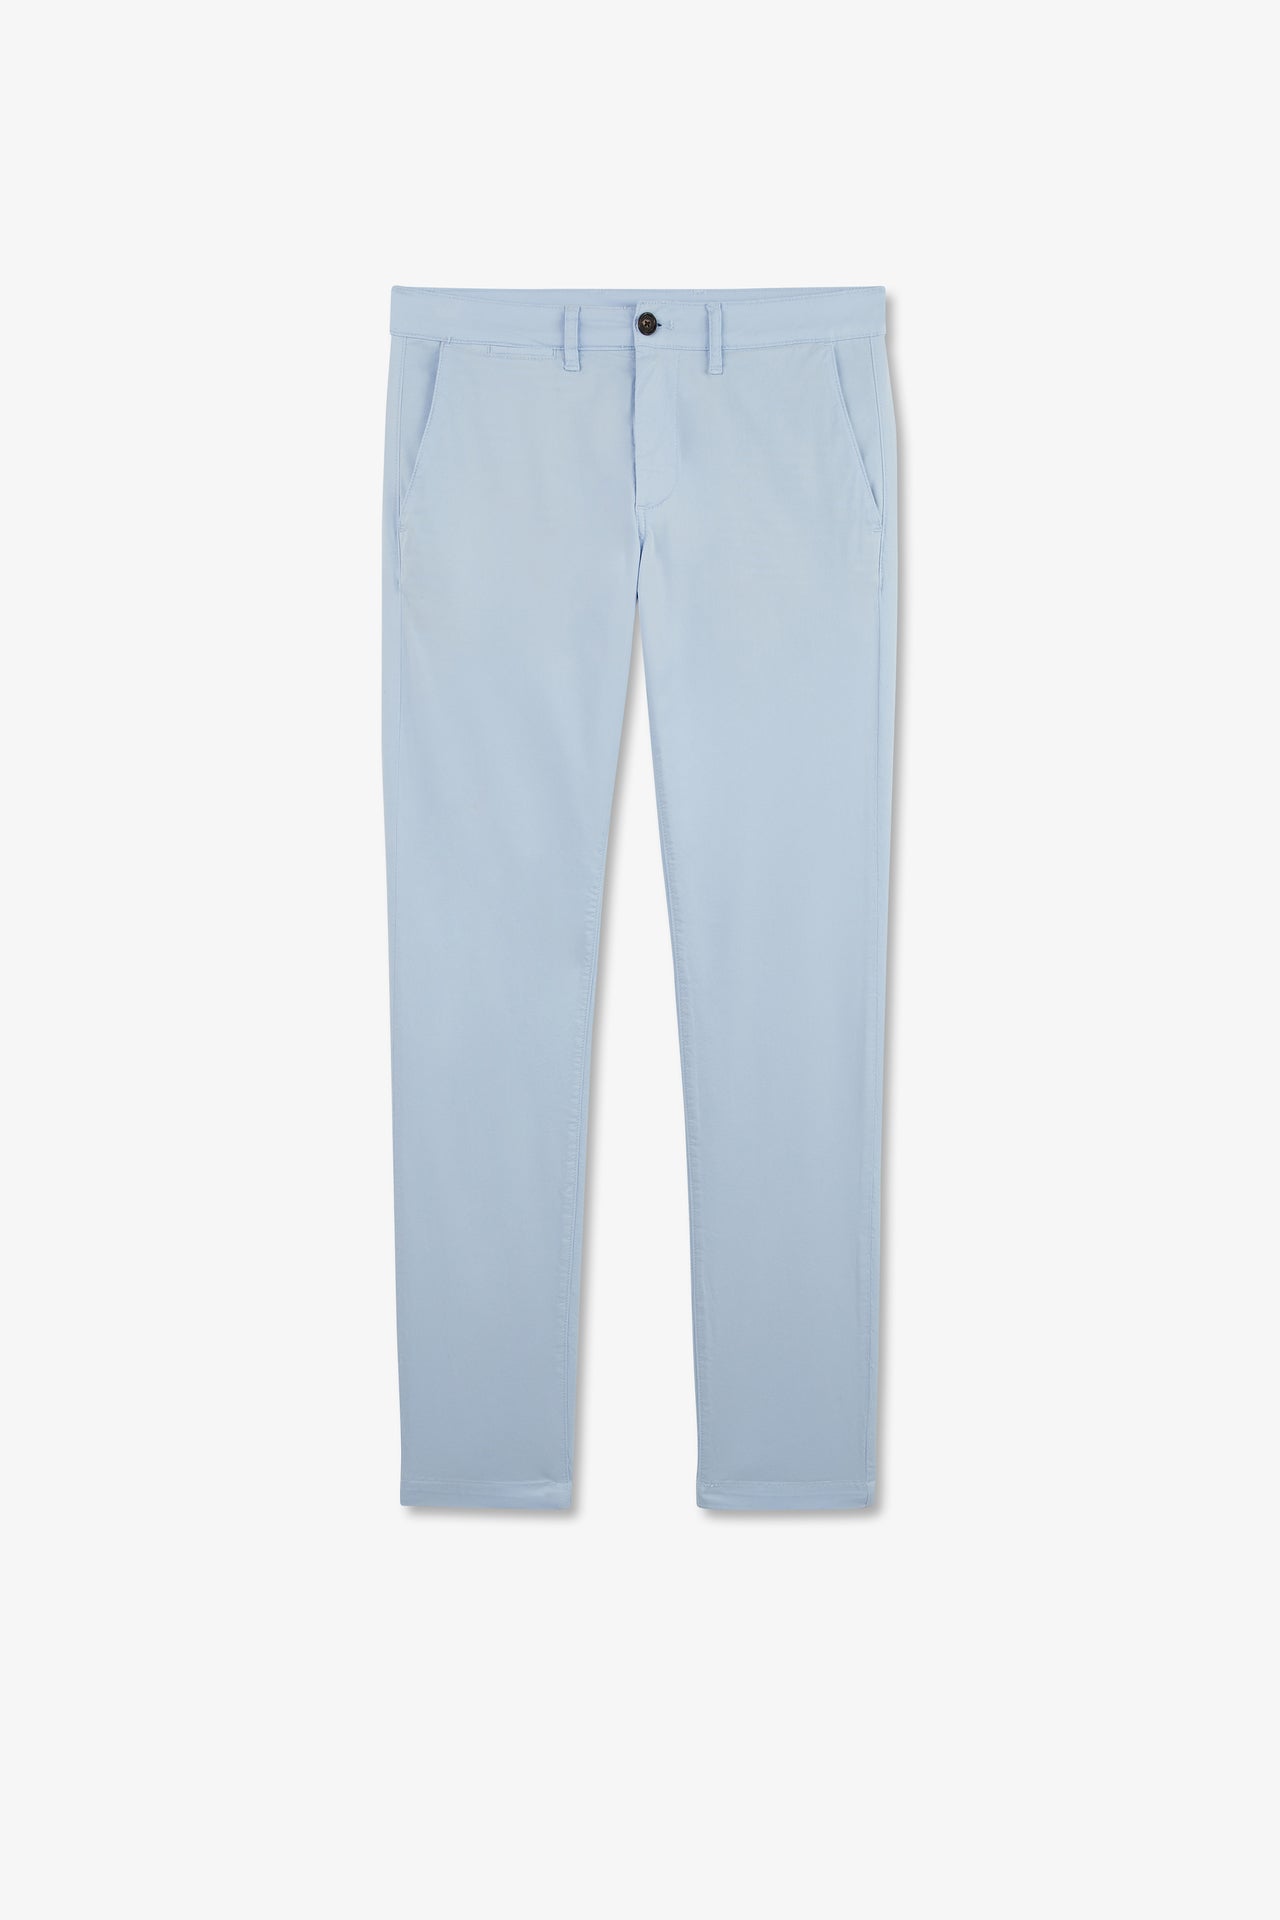 Pantalon chino bleu clair - Image 2